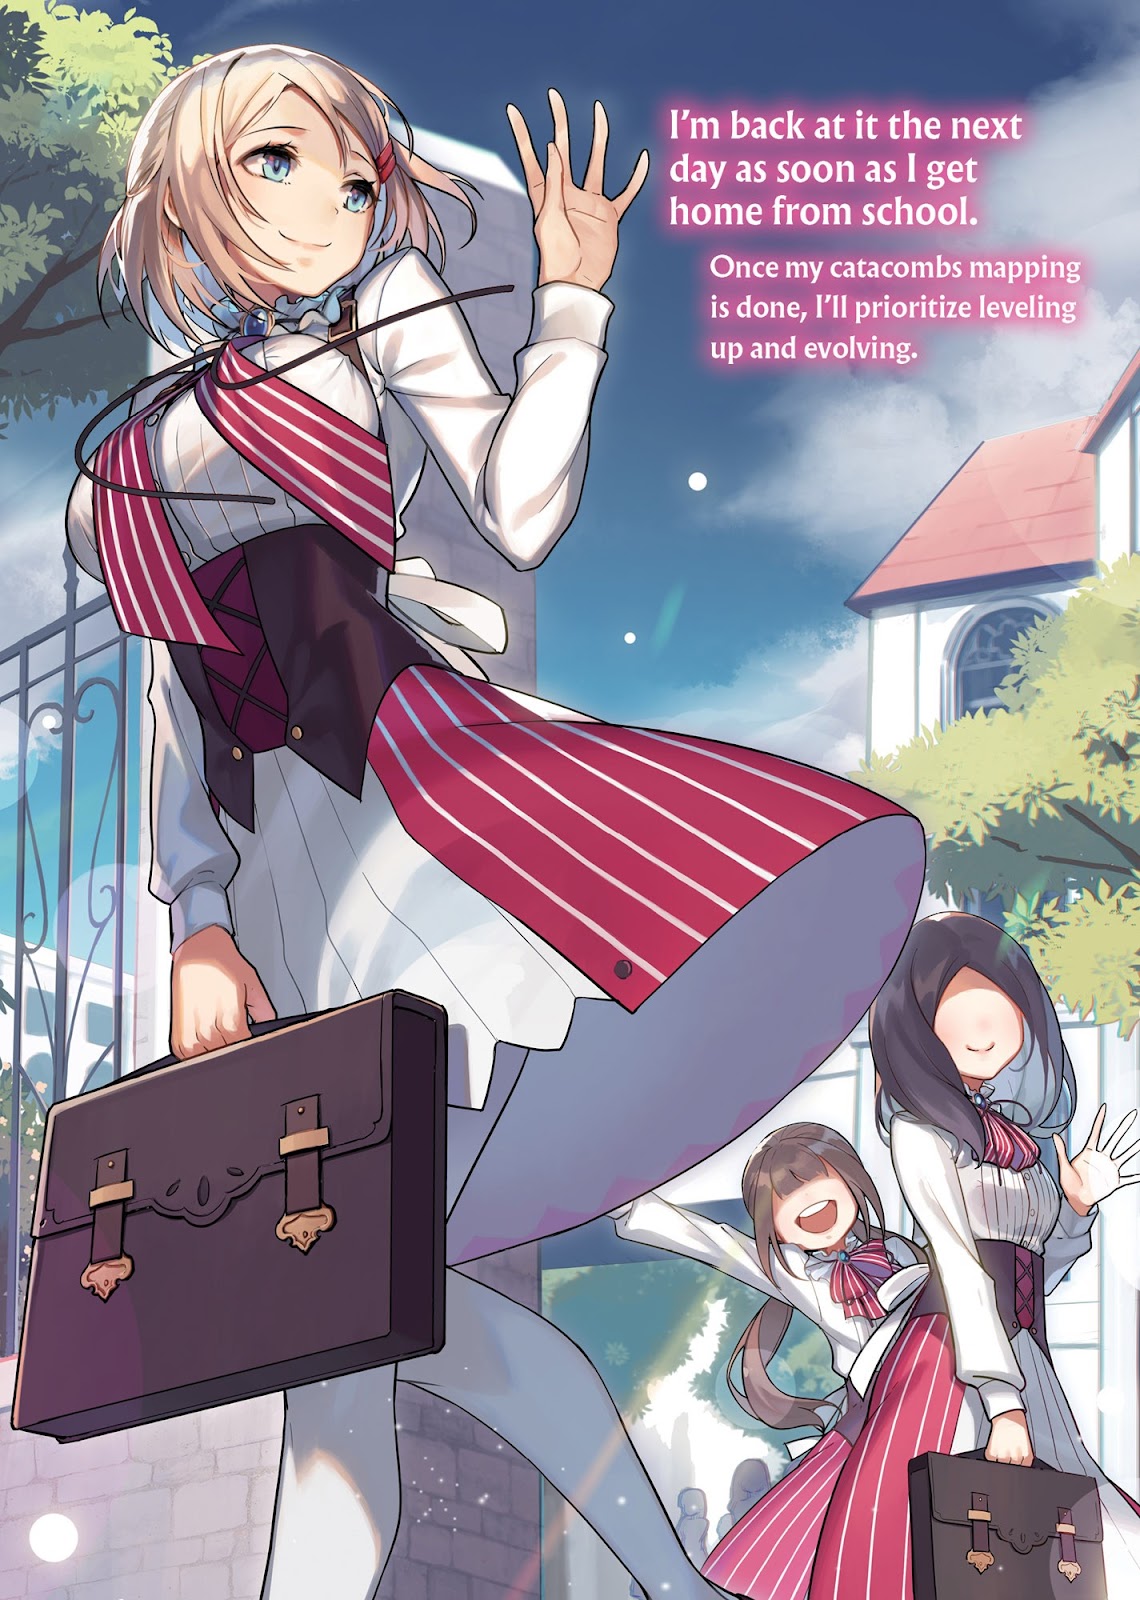 [Ruidrive] - Ilustrasi Light Novel Free Life Fantasy Online - Volume 01 - 02